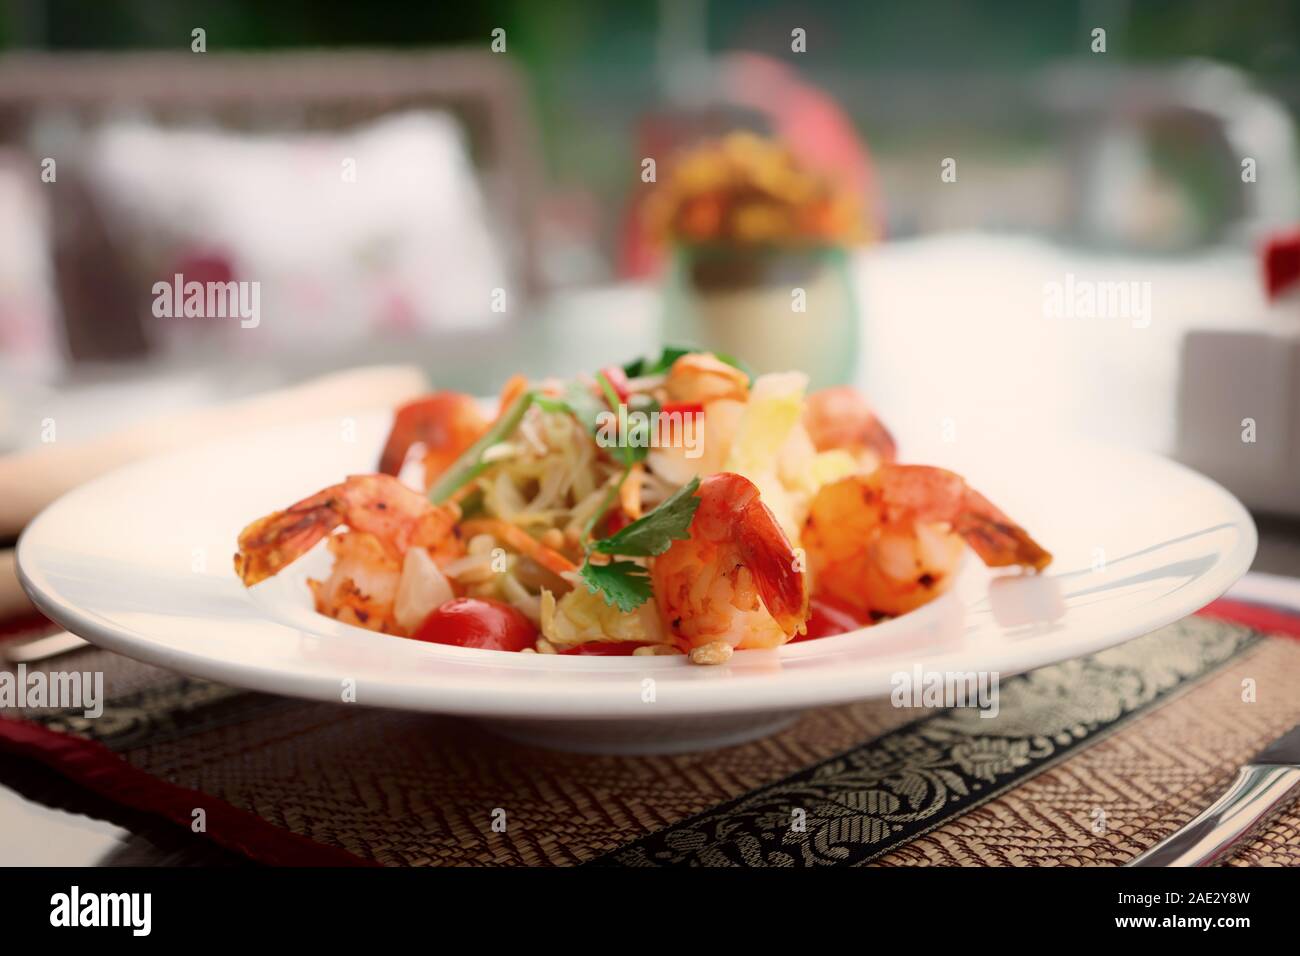 Shrimp appetizer, light summer dish on restaurant table outdoors, toned image Stock Photo